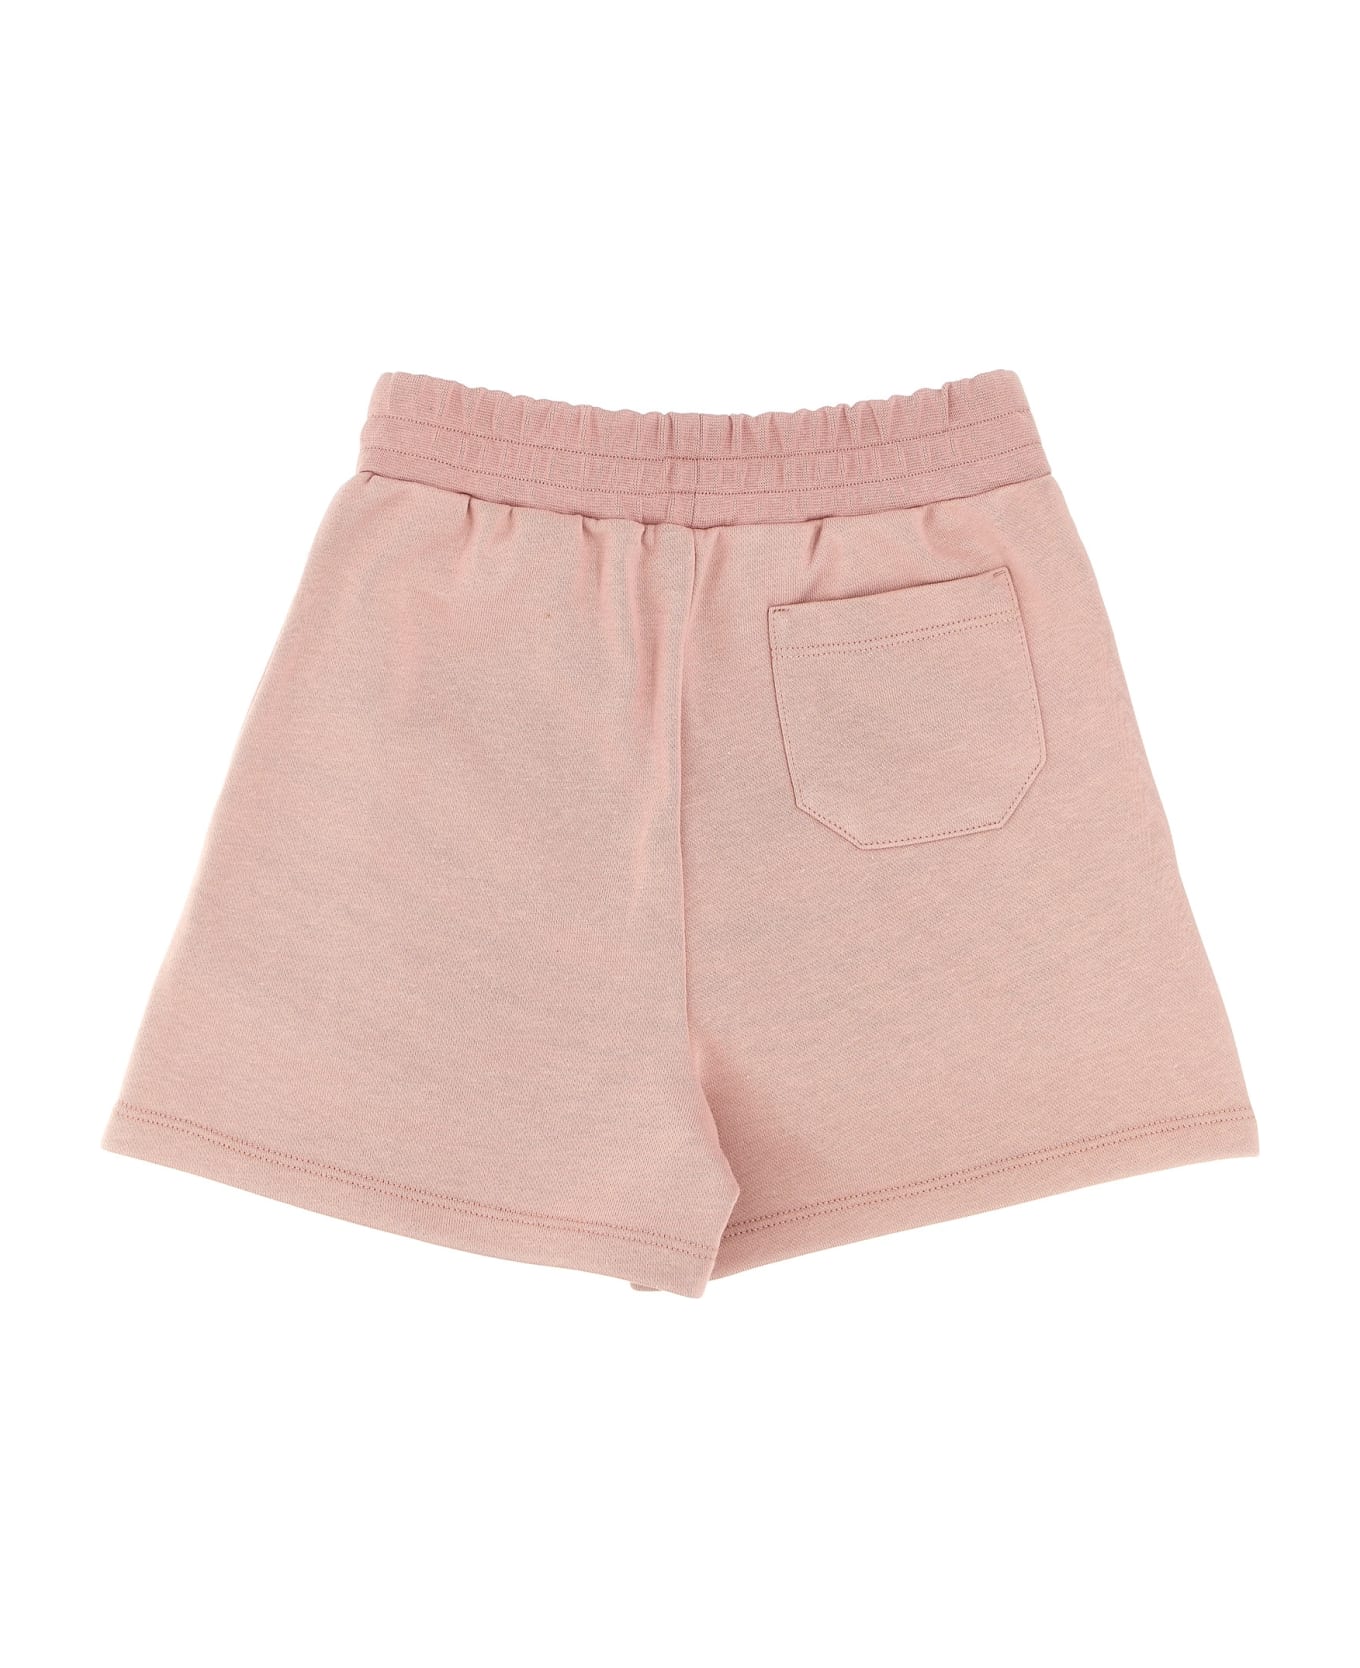 Golden Goose 'star' Bermuda Shorts - Pink